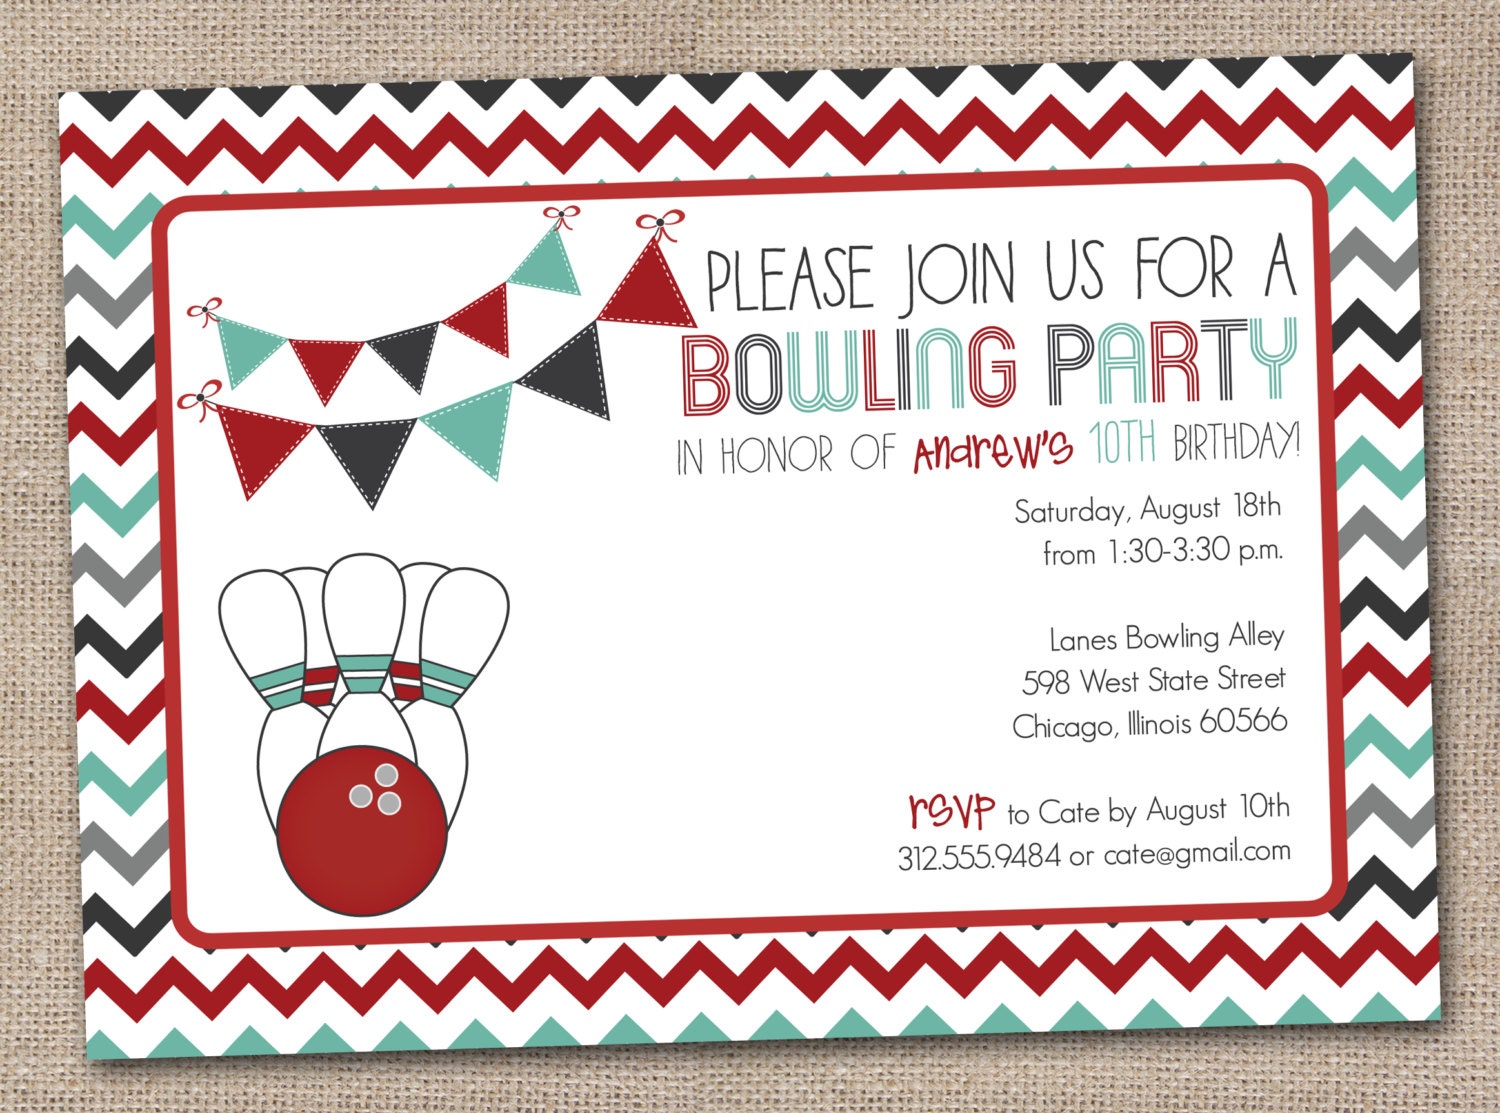 printable-bowling-party-invitations-printable-world-holiday